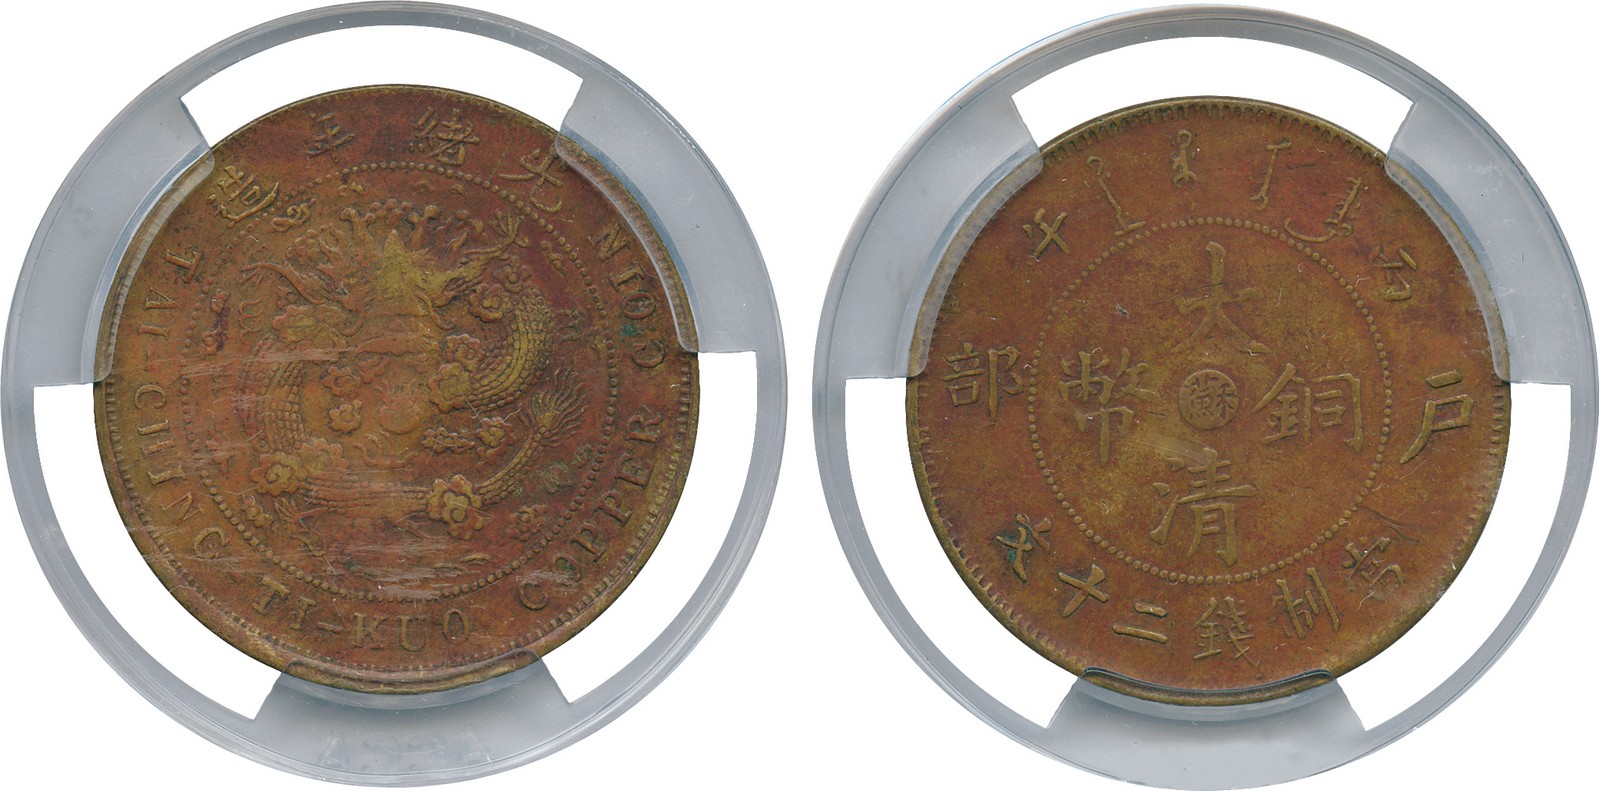 COINS, 錢幣, CHINA - PROVINCIAL ISSUES, 中國 - 地方發行, Kiangsu Province 江蘇省: Copper 20-Cash, CD1906 丙午, “